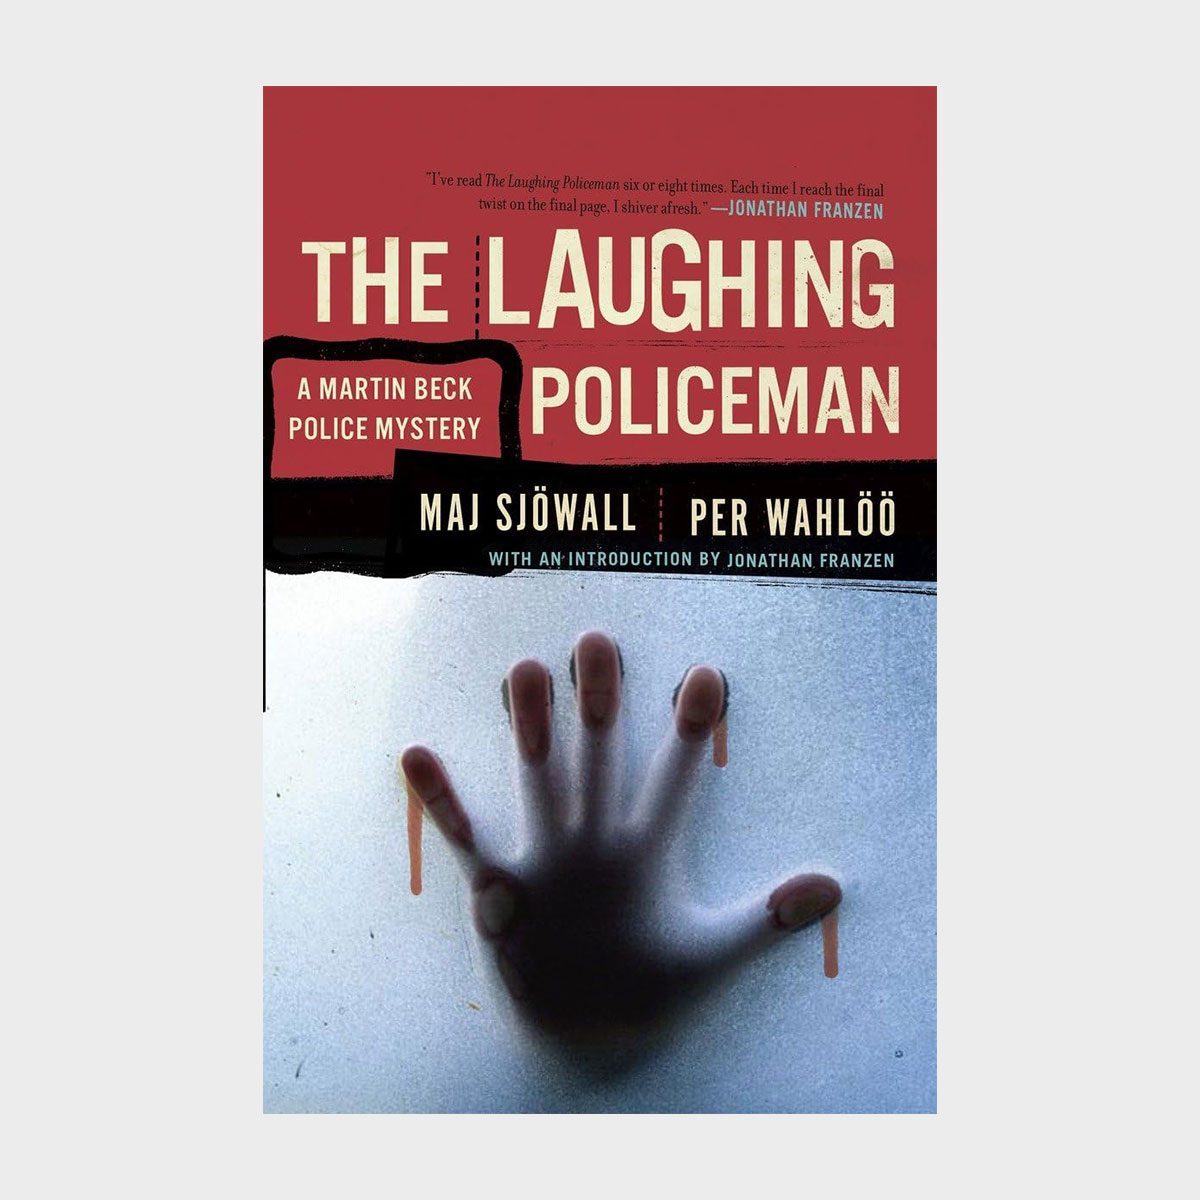 The Laughing Policeman By Maj Sjöwall And Per Wahlöö